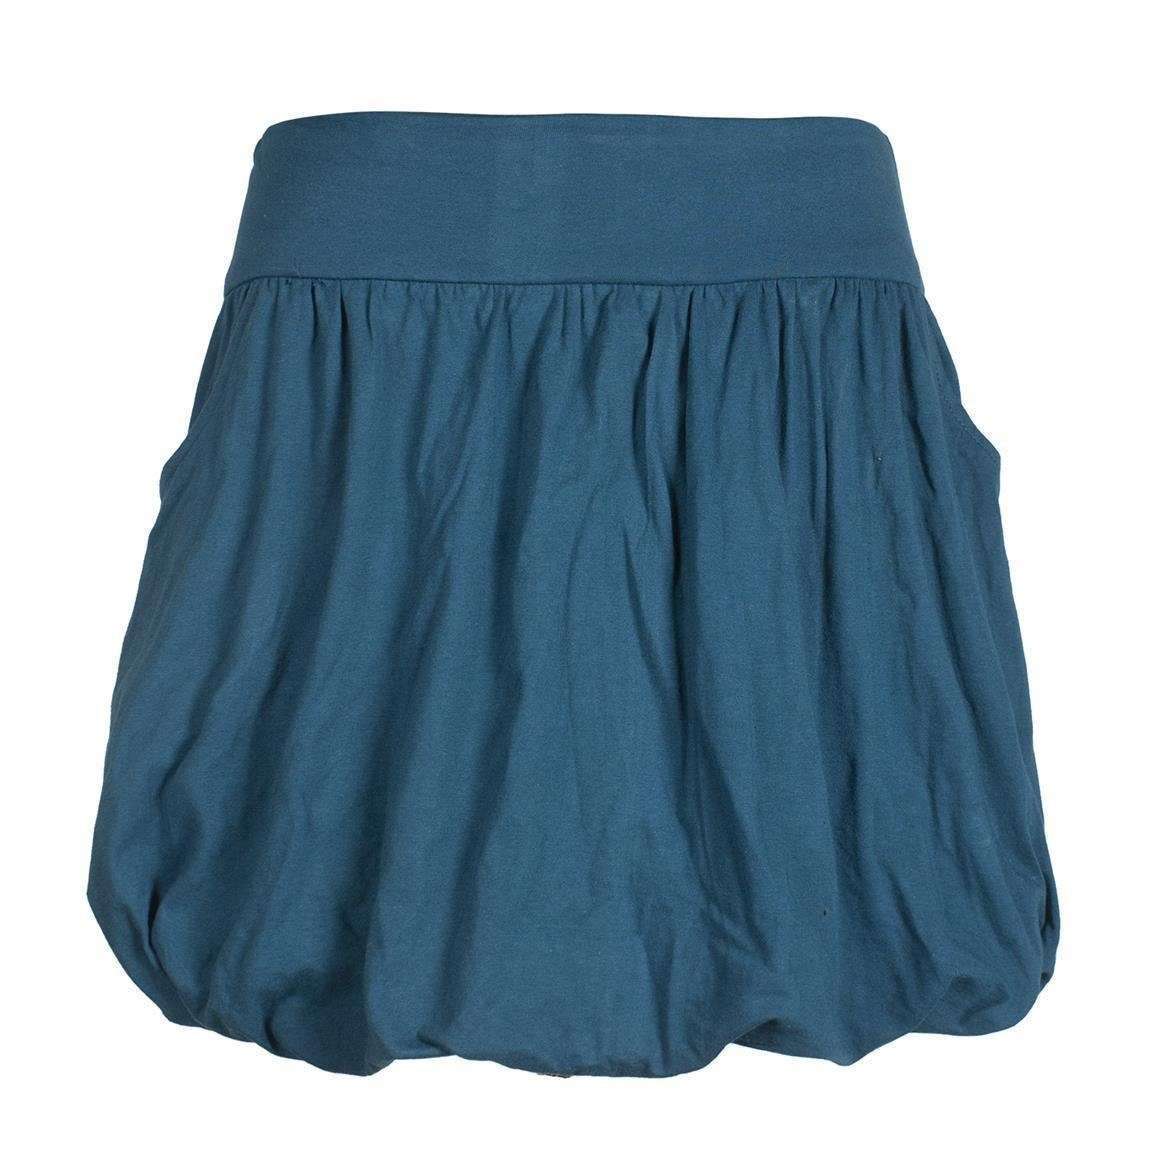 Юбка-баллон базовая юбка-баллон юбка-плюдер с карманами из органического хлопка